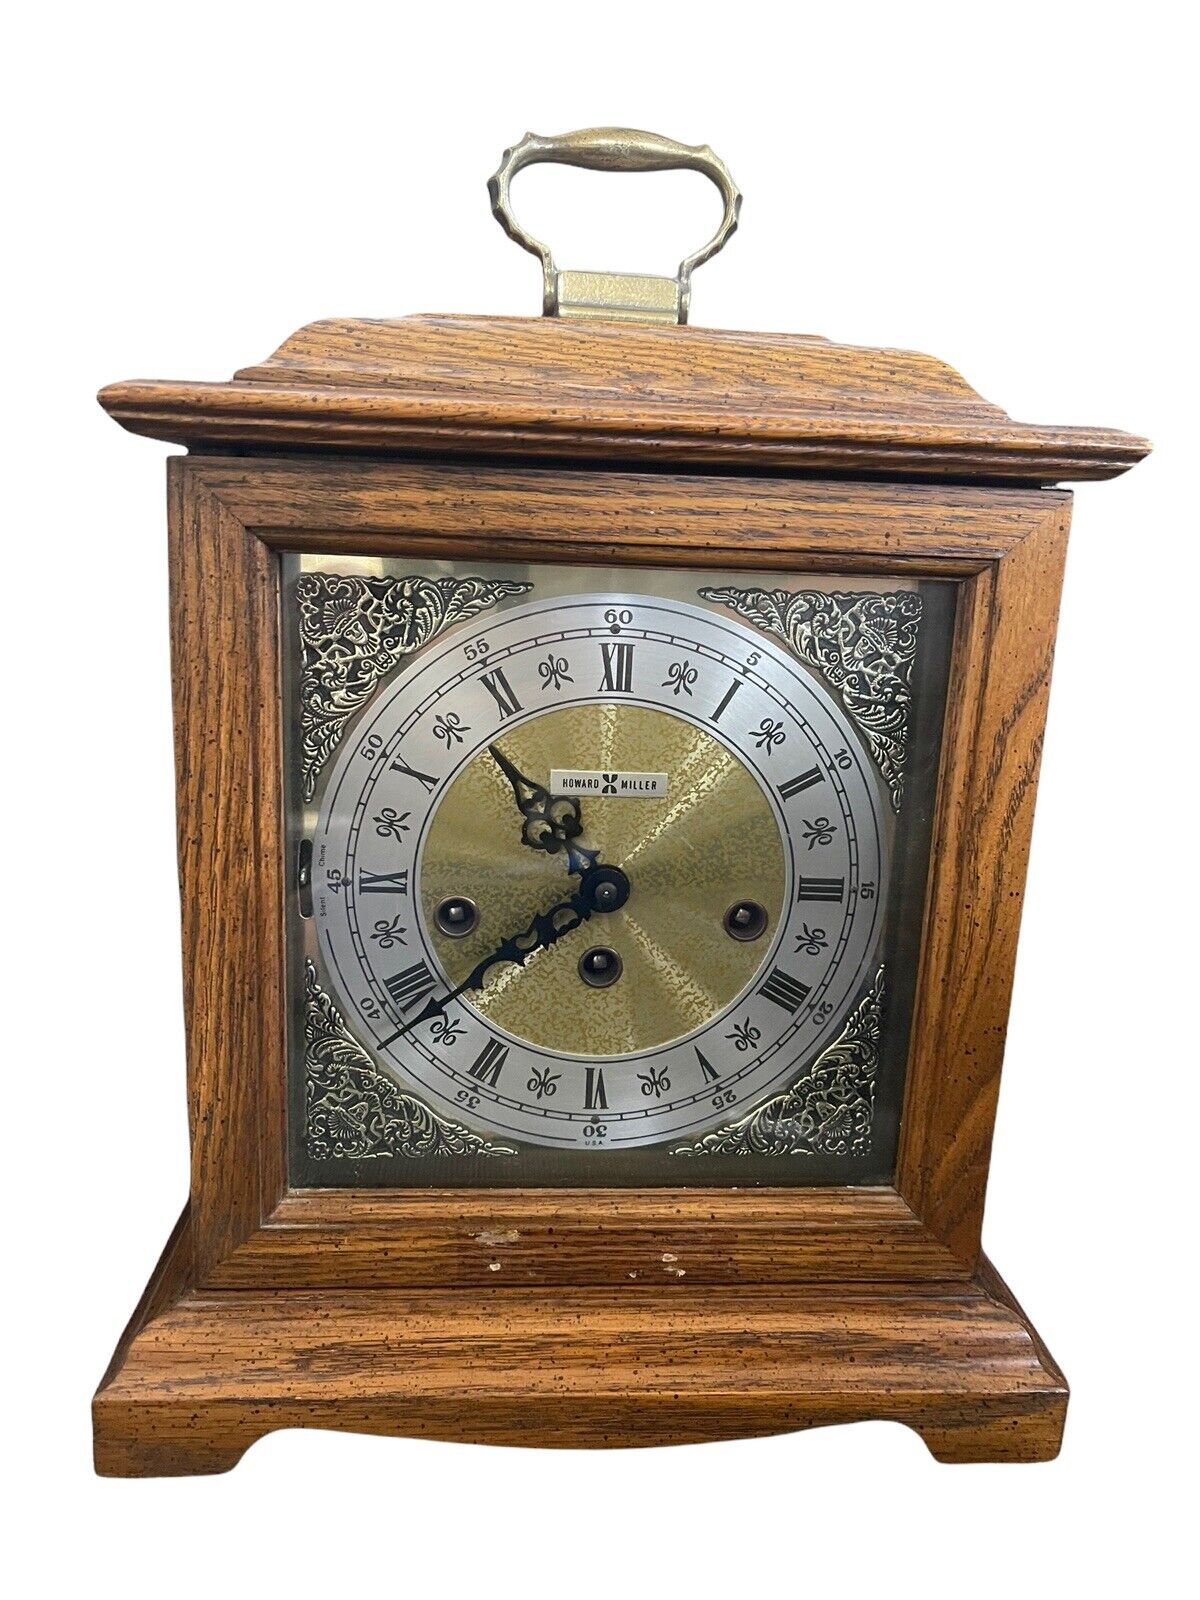 Howard Miller (340-020) Mantel Clock - Westminster Chimes Gift Idea.